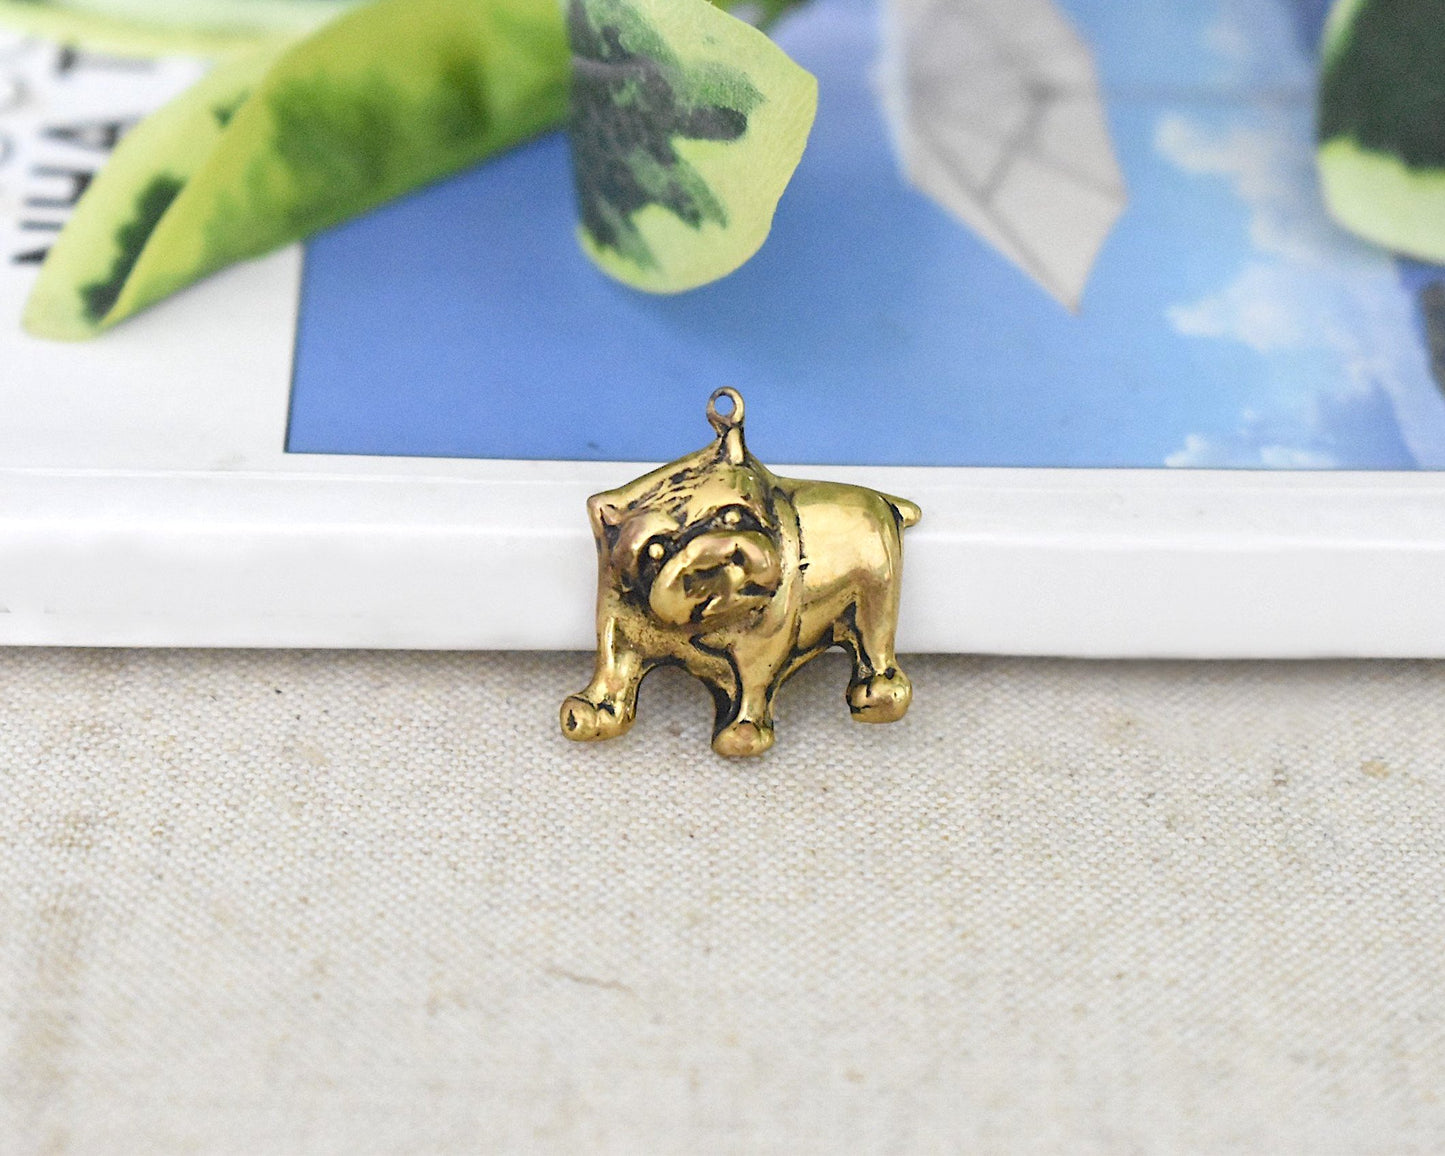 Chubby English Bulldog Handmade Gold Brass Charm Necklace Pendant Jewelry